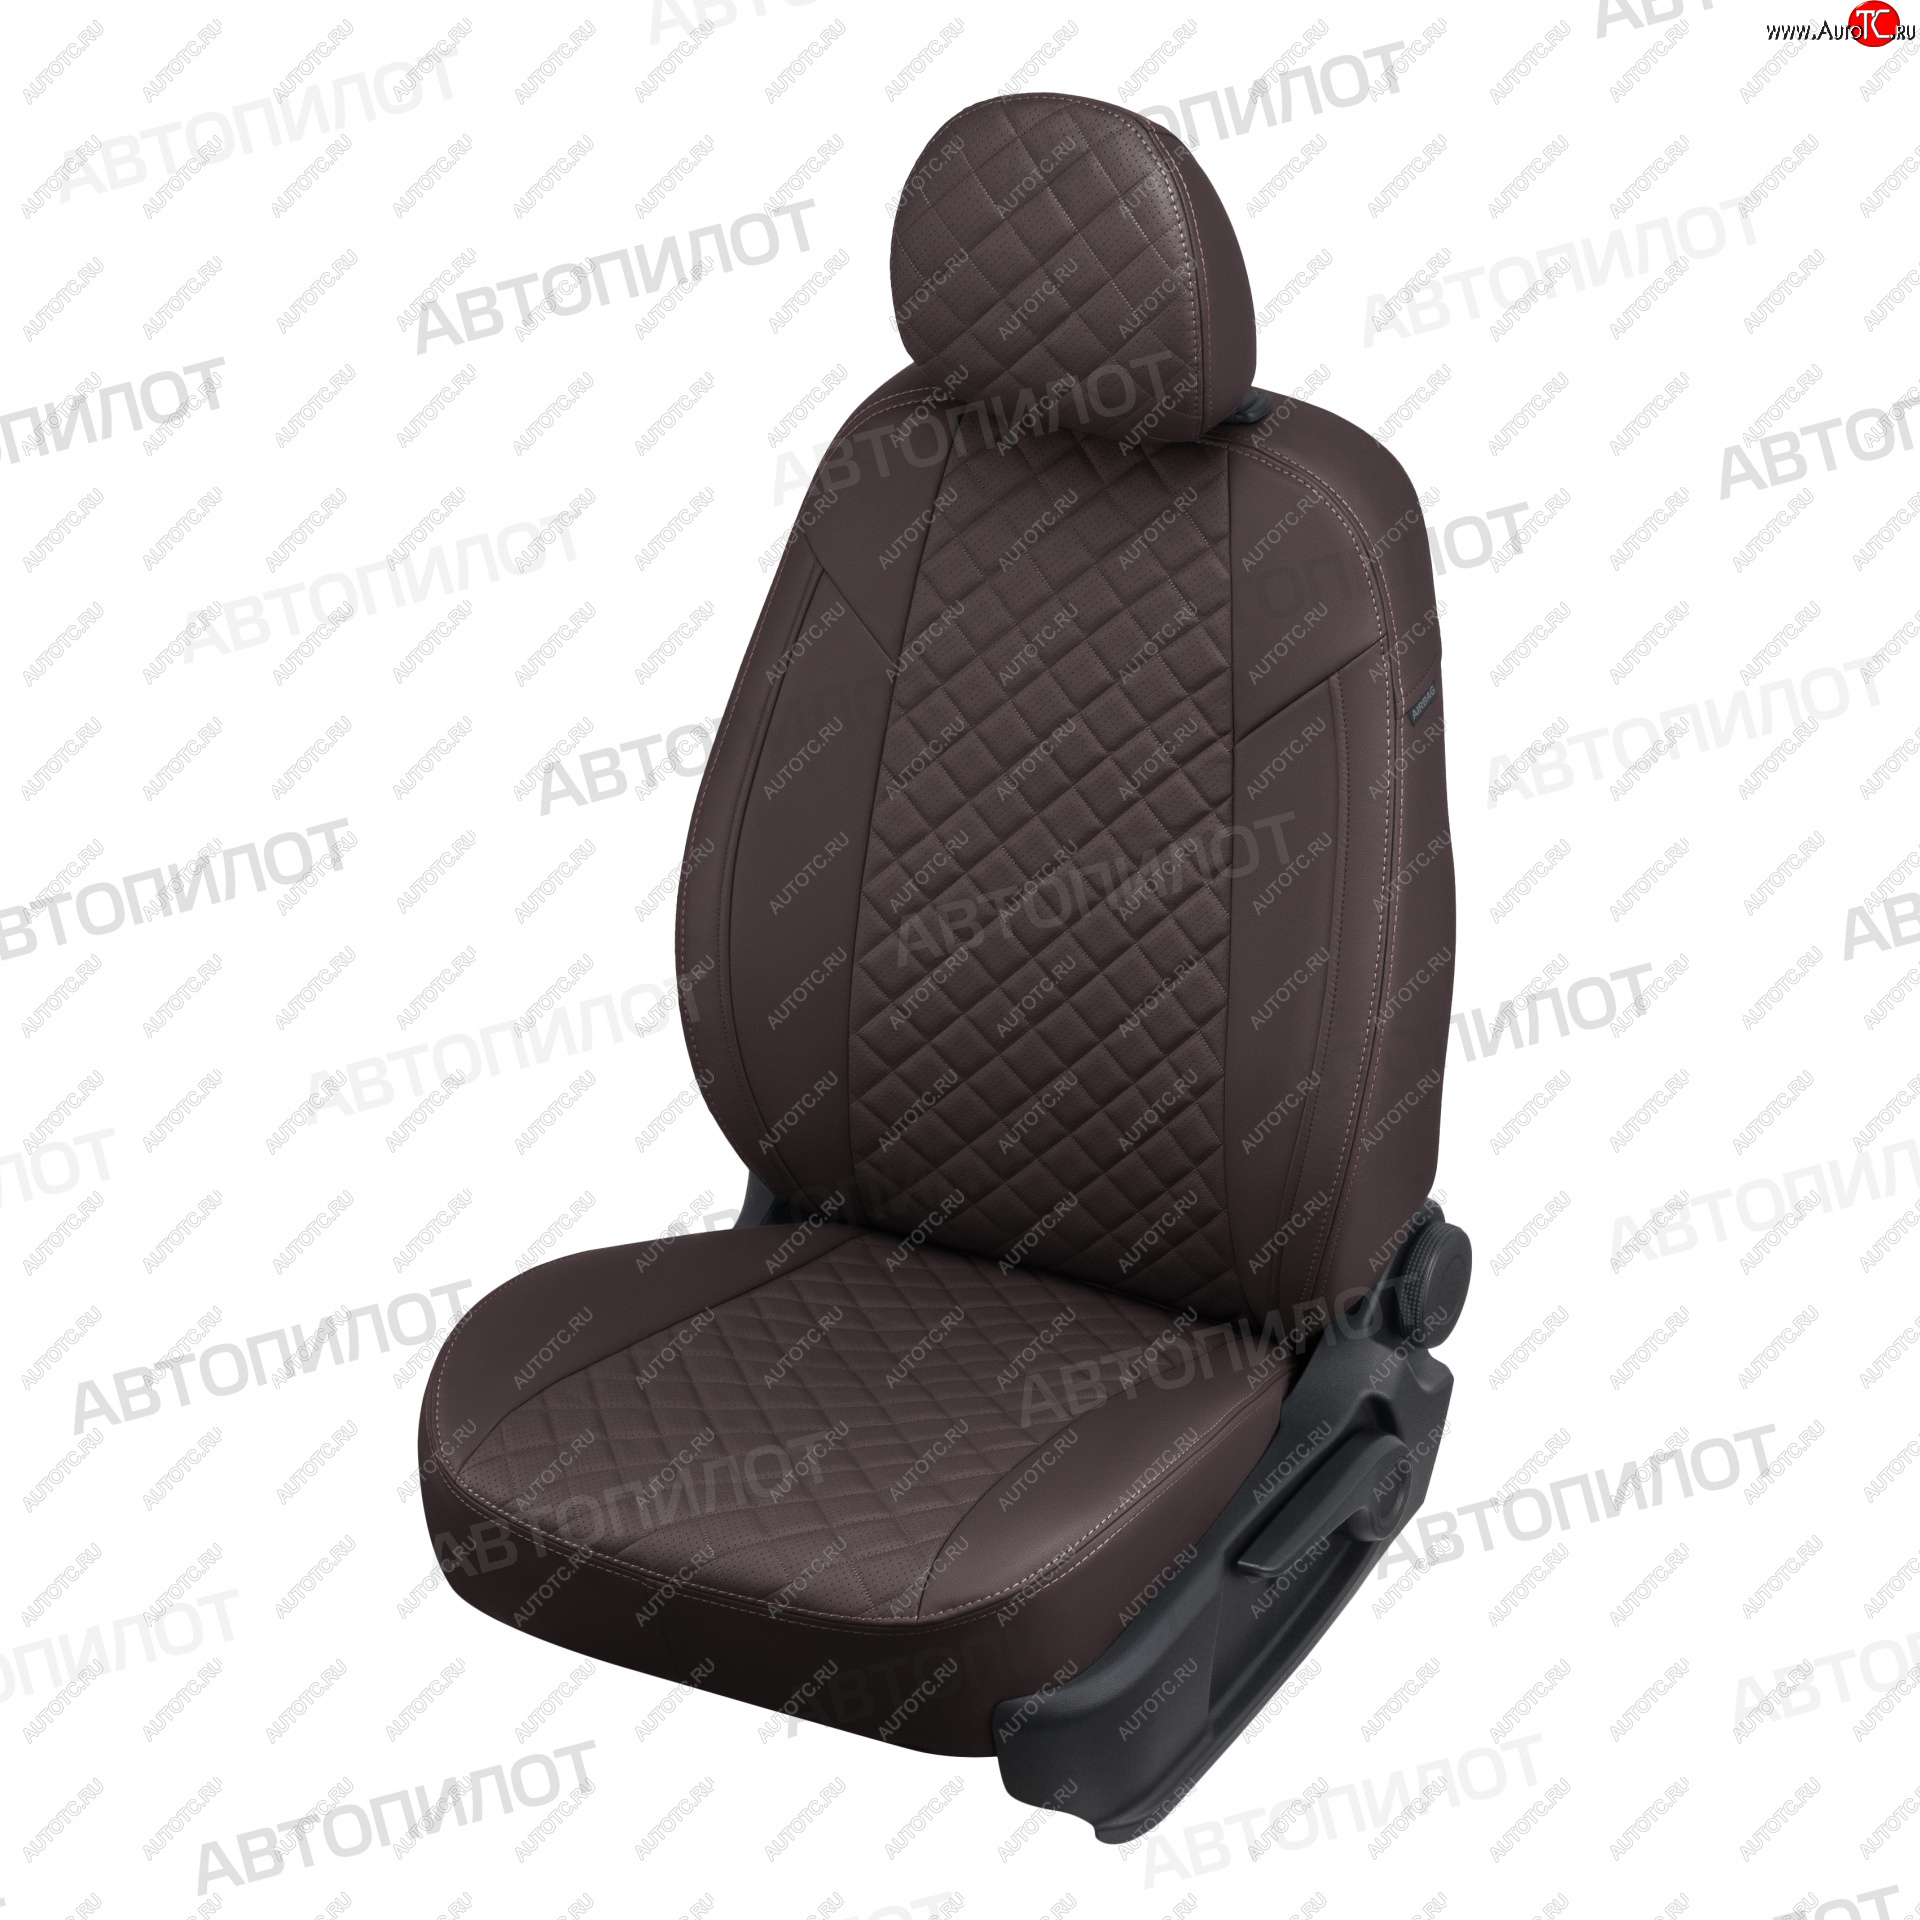 22 299 р. Чехлы сидений (9 мест, экокожа) Автопилот Ромб  Ford Transit  3 (2006-2014) (шоколад)